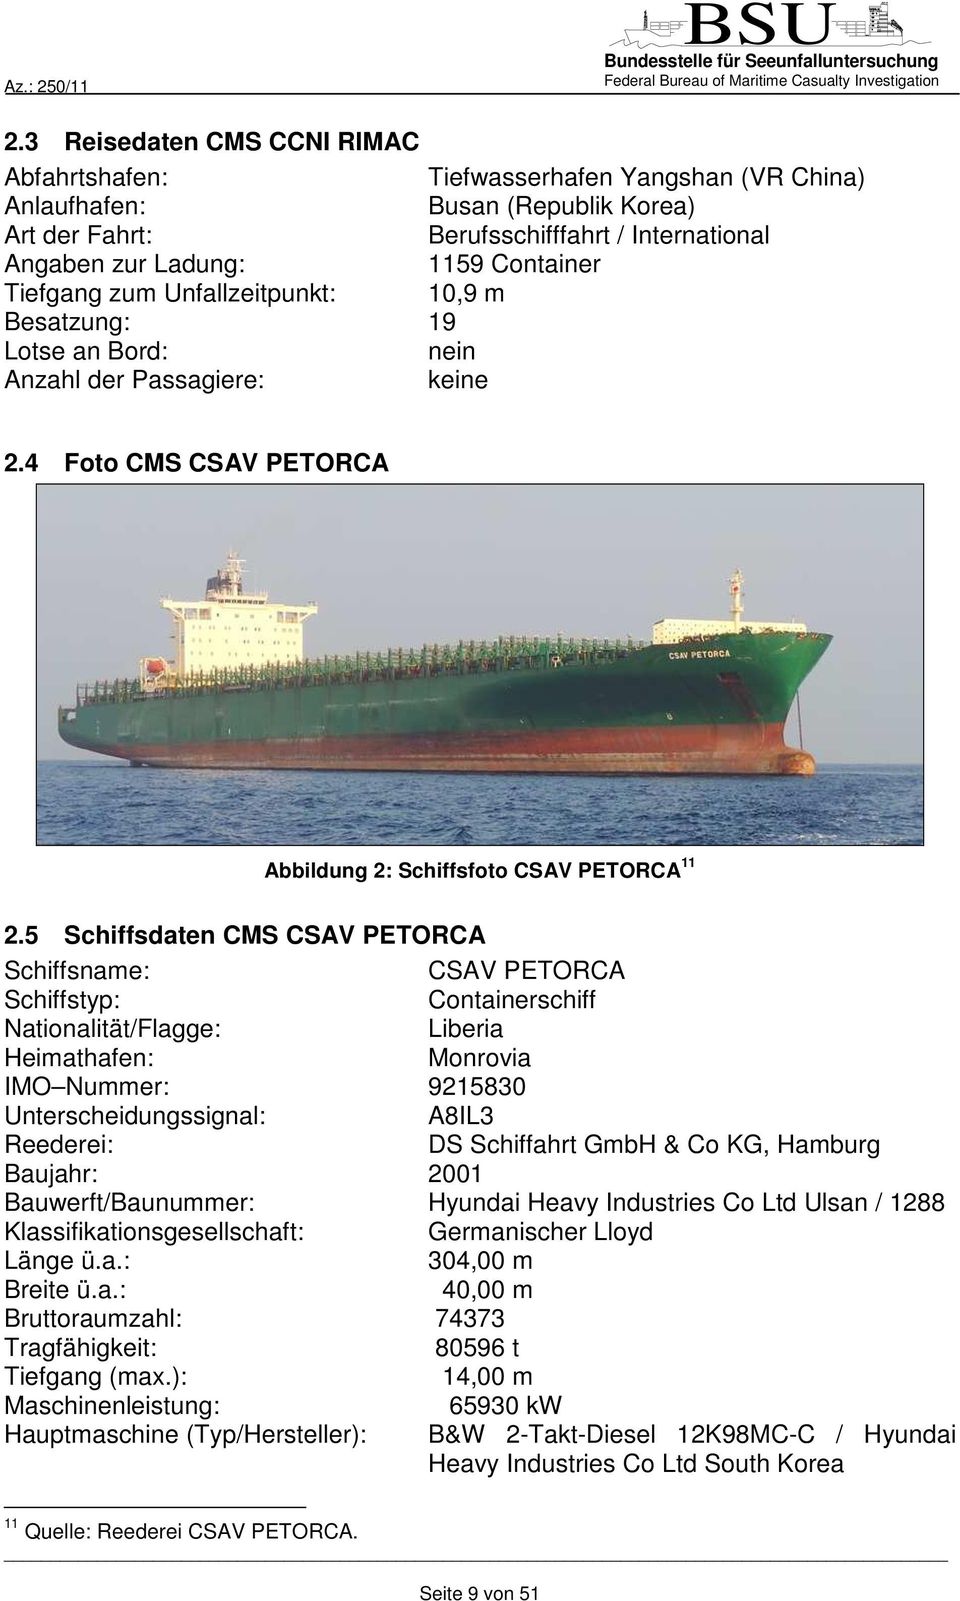 5 Schiffsdaten CMS CSAV PETORCA Schiffsname: CSAV PETORCA Schiffstyp: Containerschiff Nationalität/Flagge: Liberia Heimathafen: Monrovia IMO Nummer: 9215830 Unterscheidungssignal: A8IL3 Reederei: DS